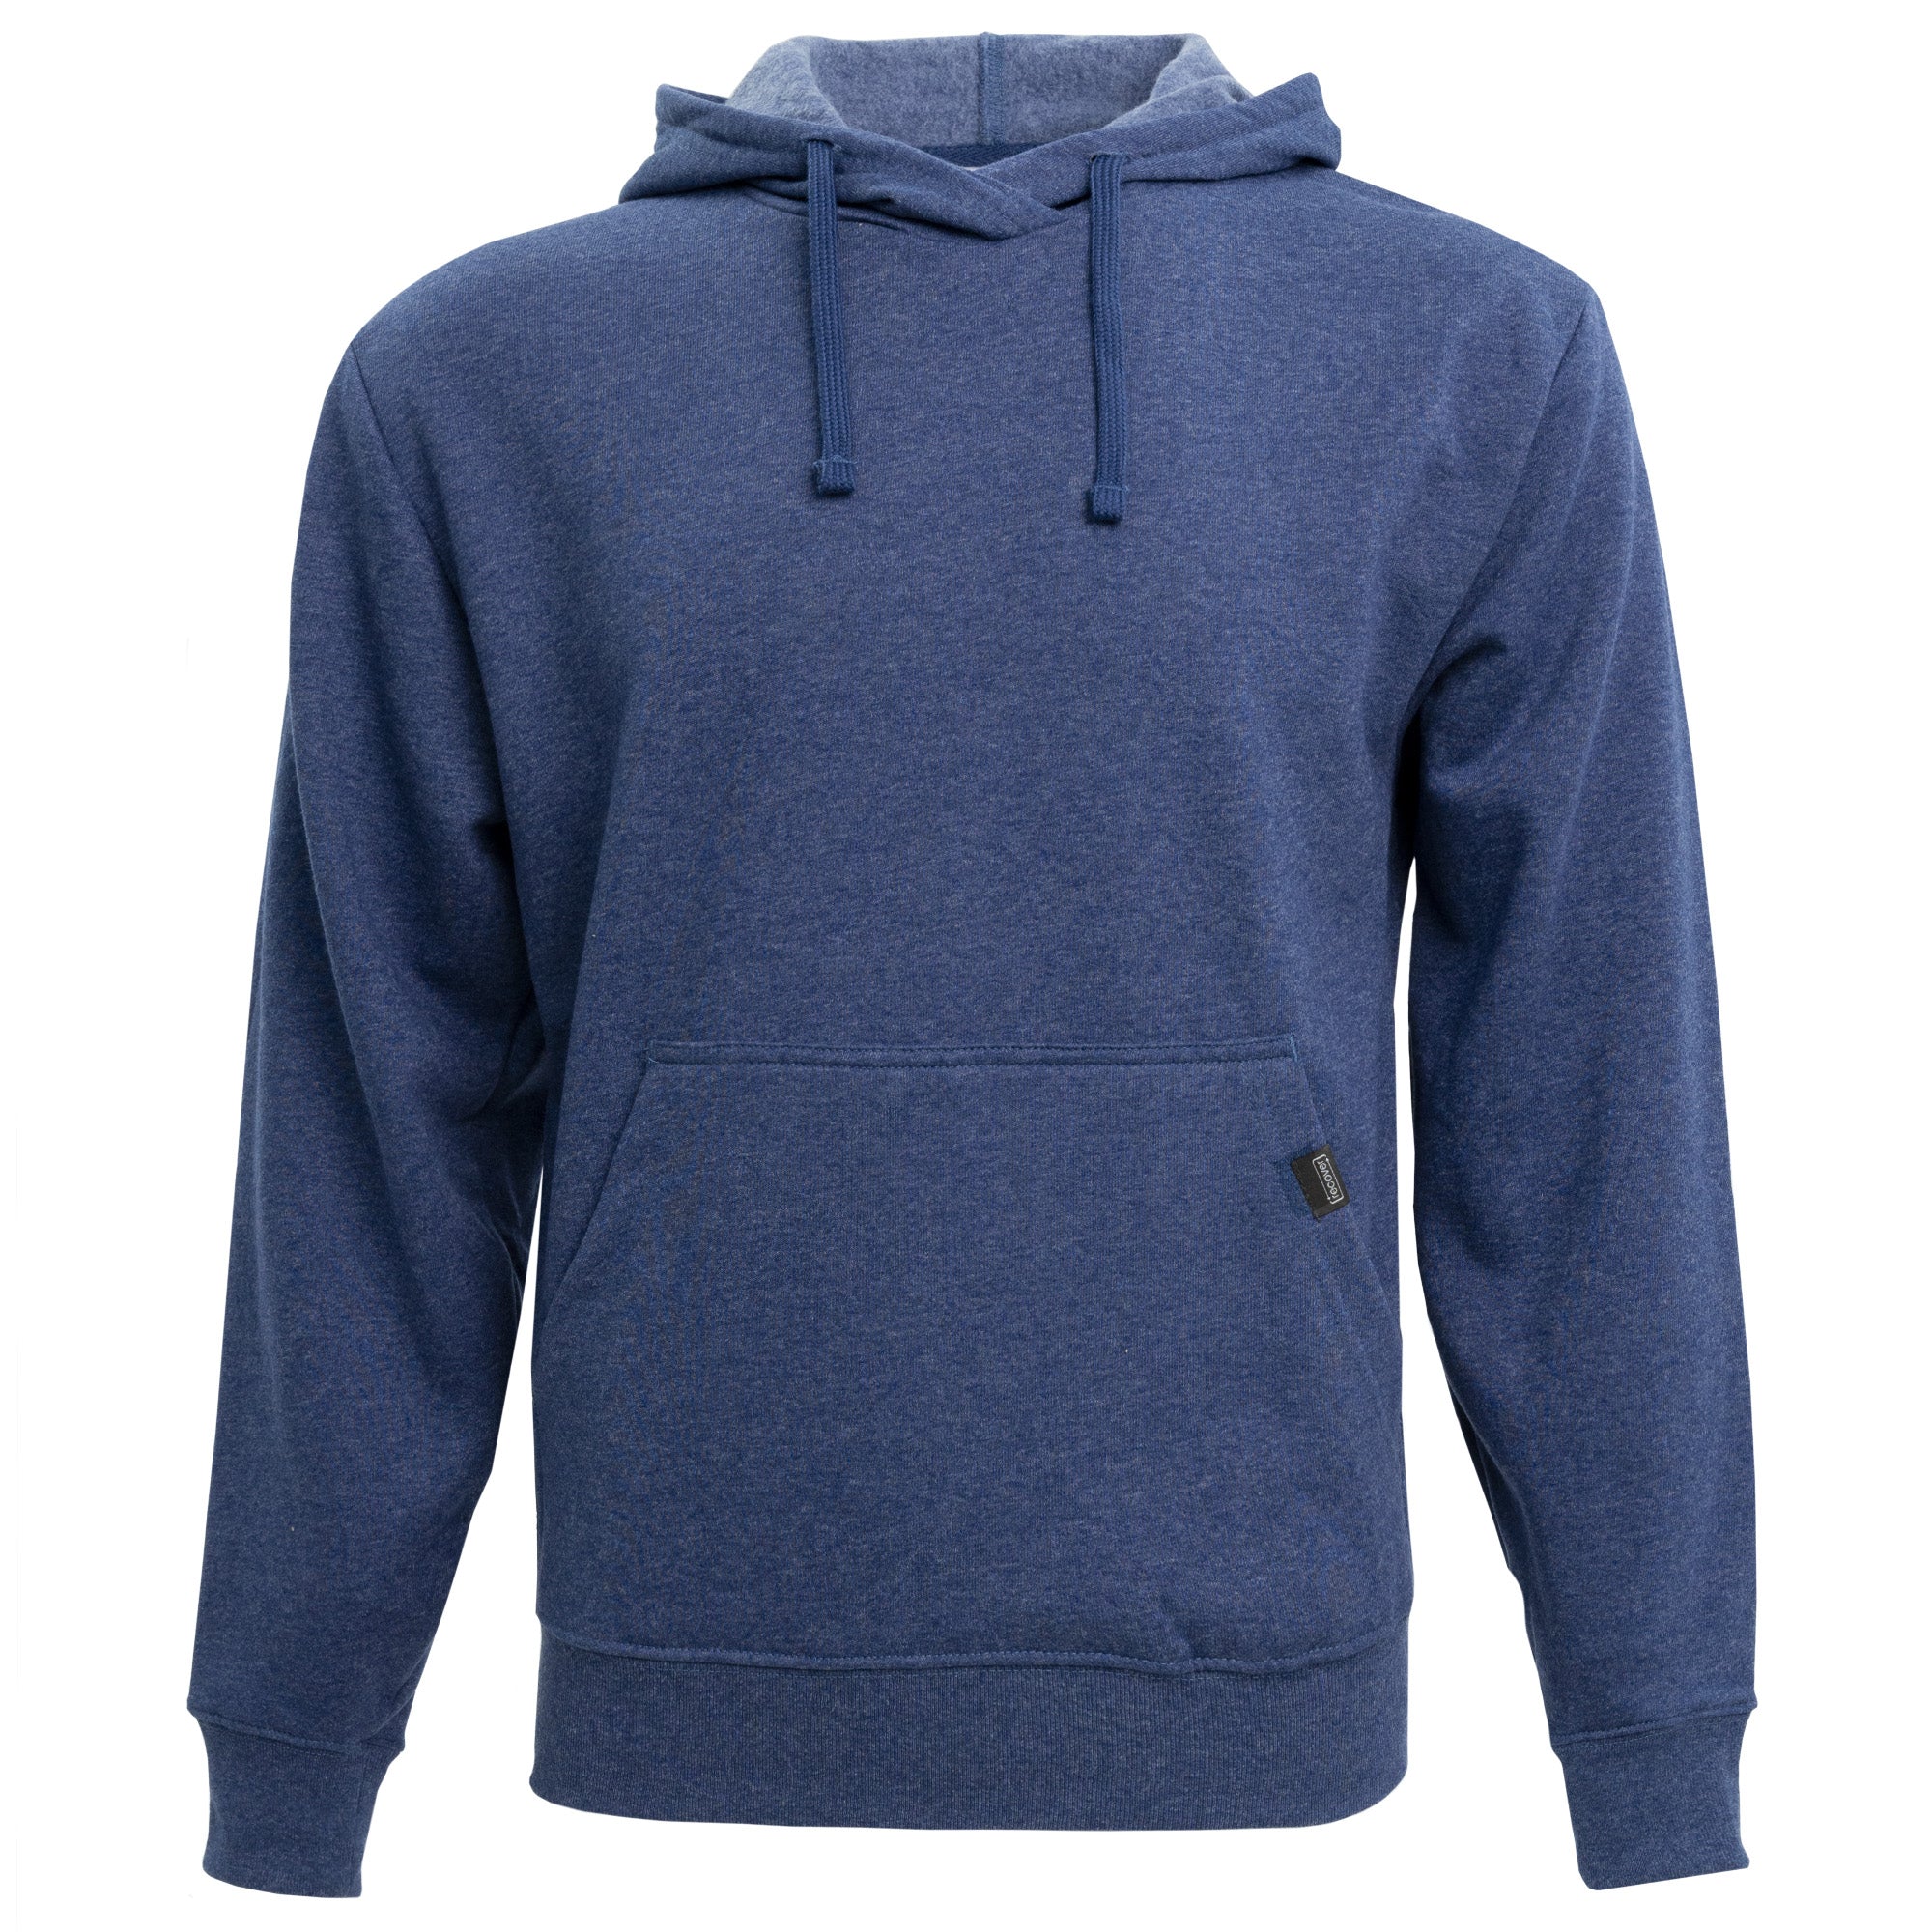 Polo navy blue hoodie - Gem